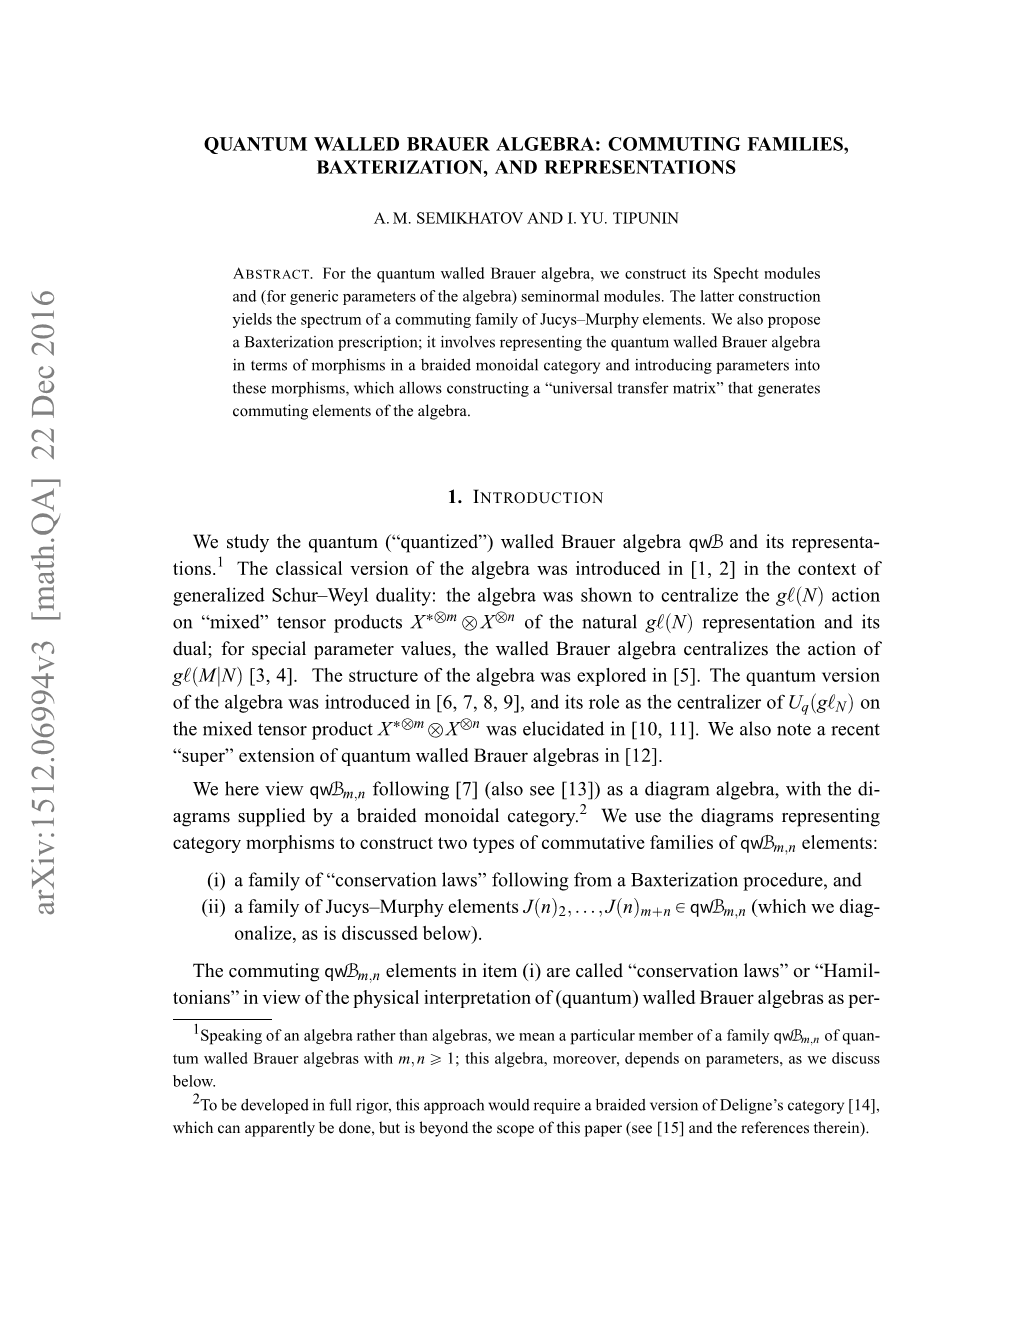 Quantum Walled Brauer Algebra: Commuting Families, Baxterization, and Representations